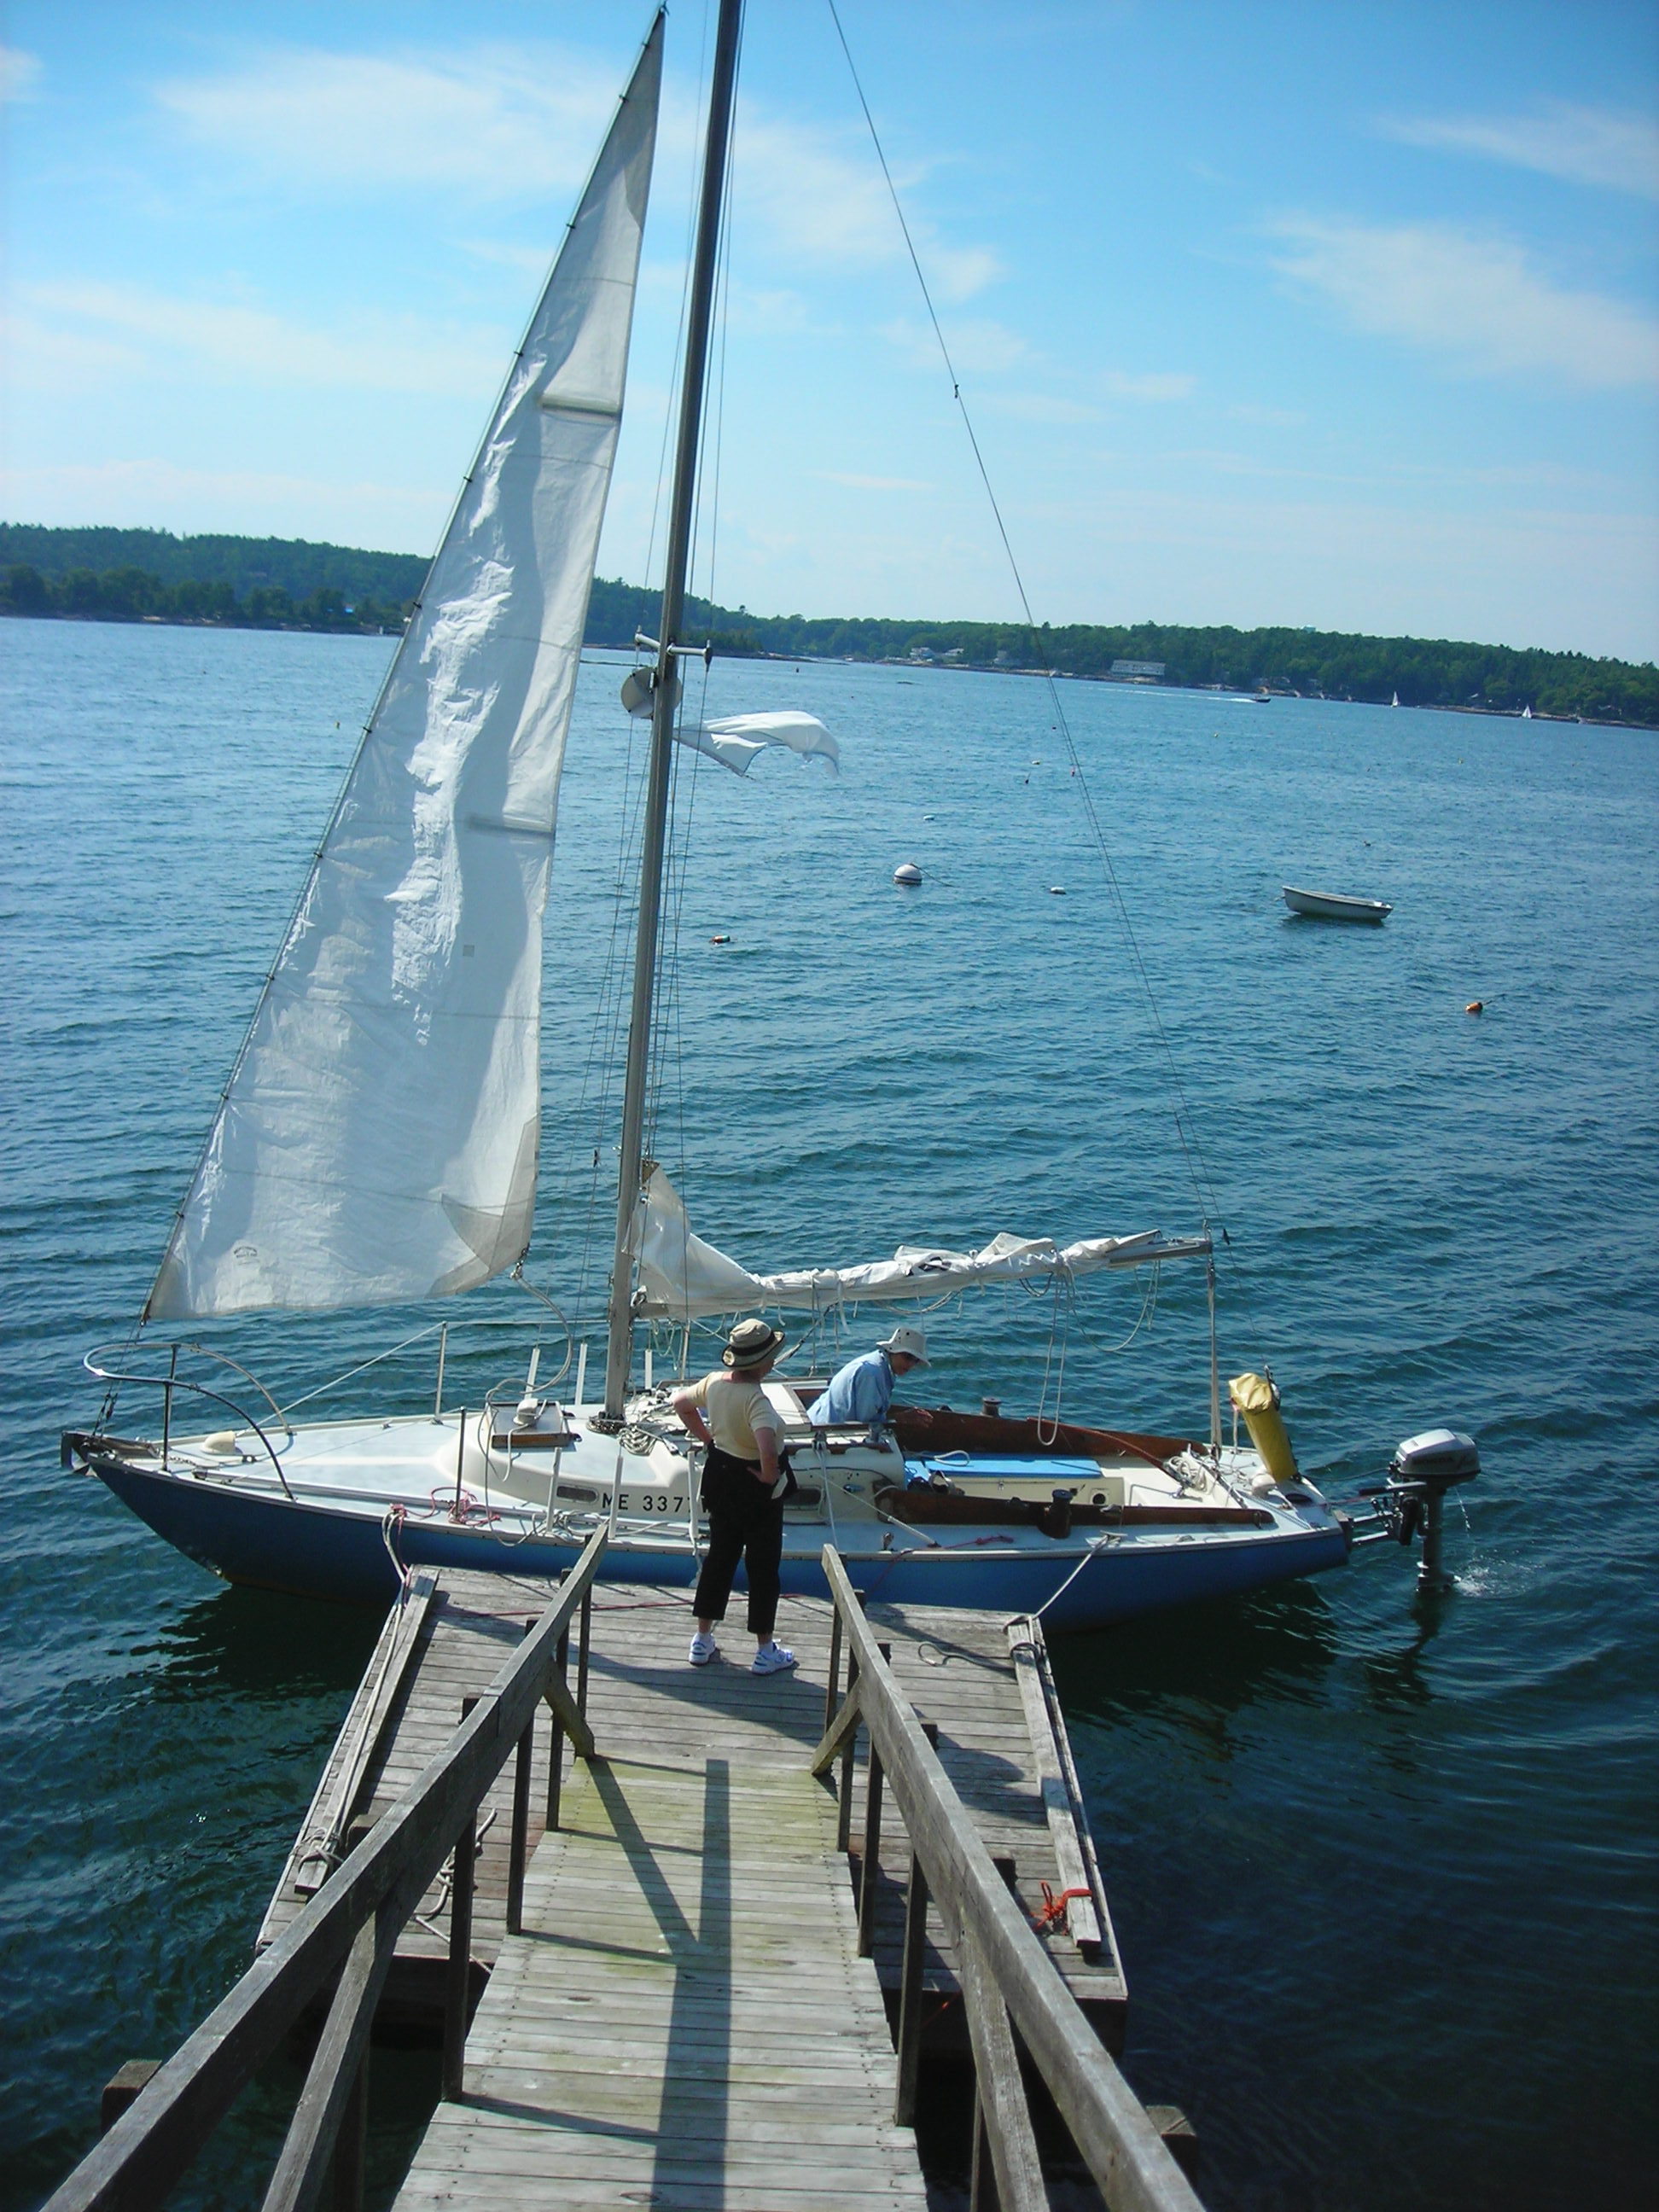 Andrew's sailboat